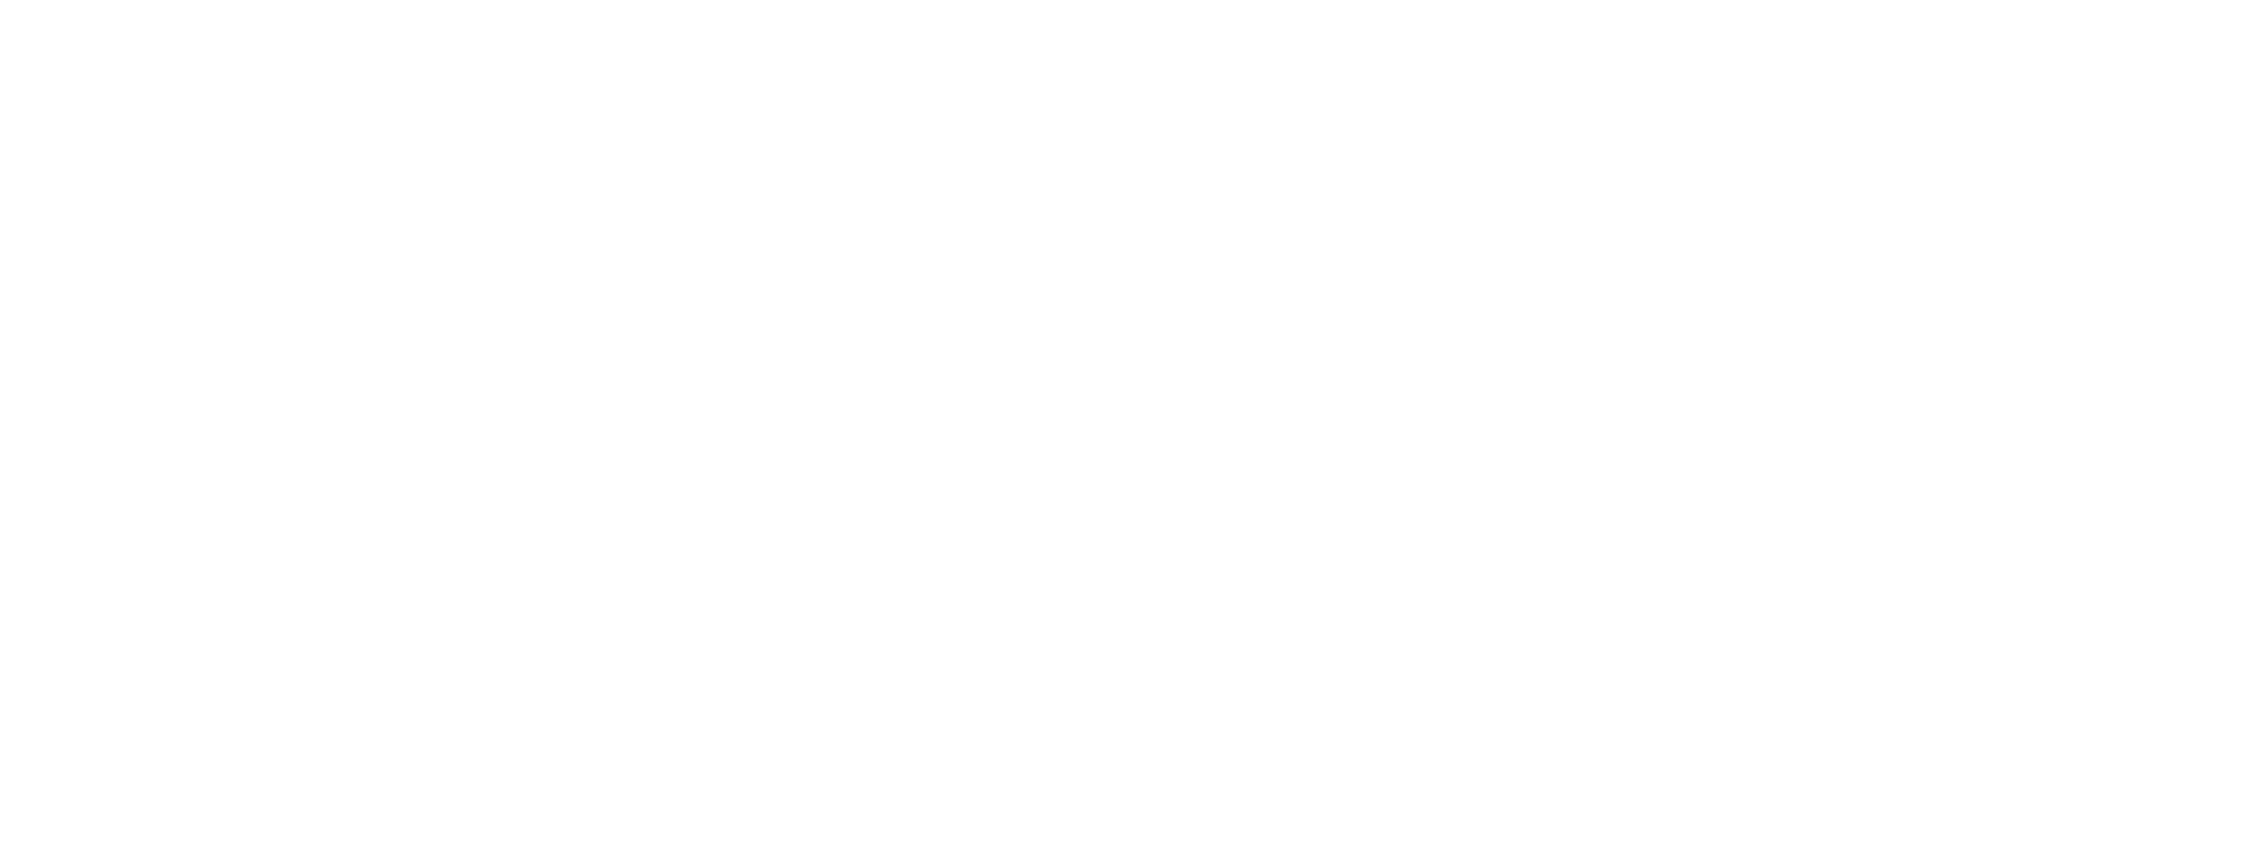 capital radio cyprus logo